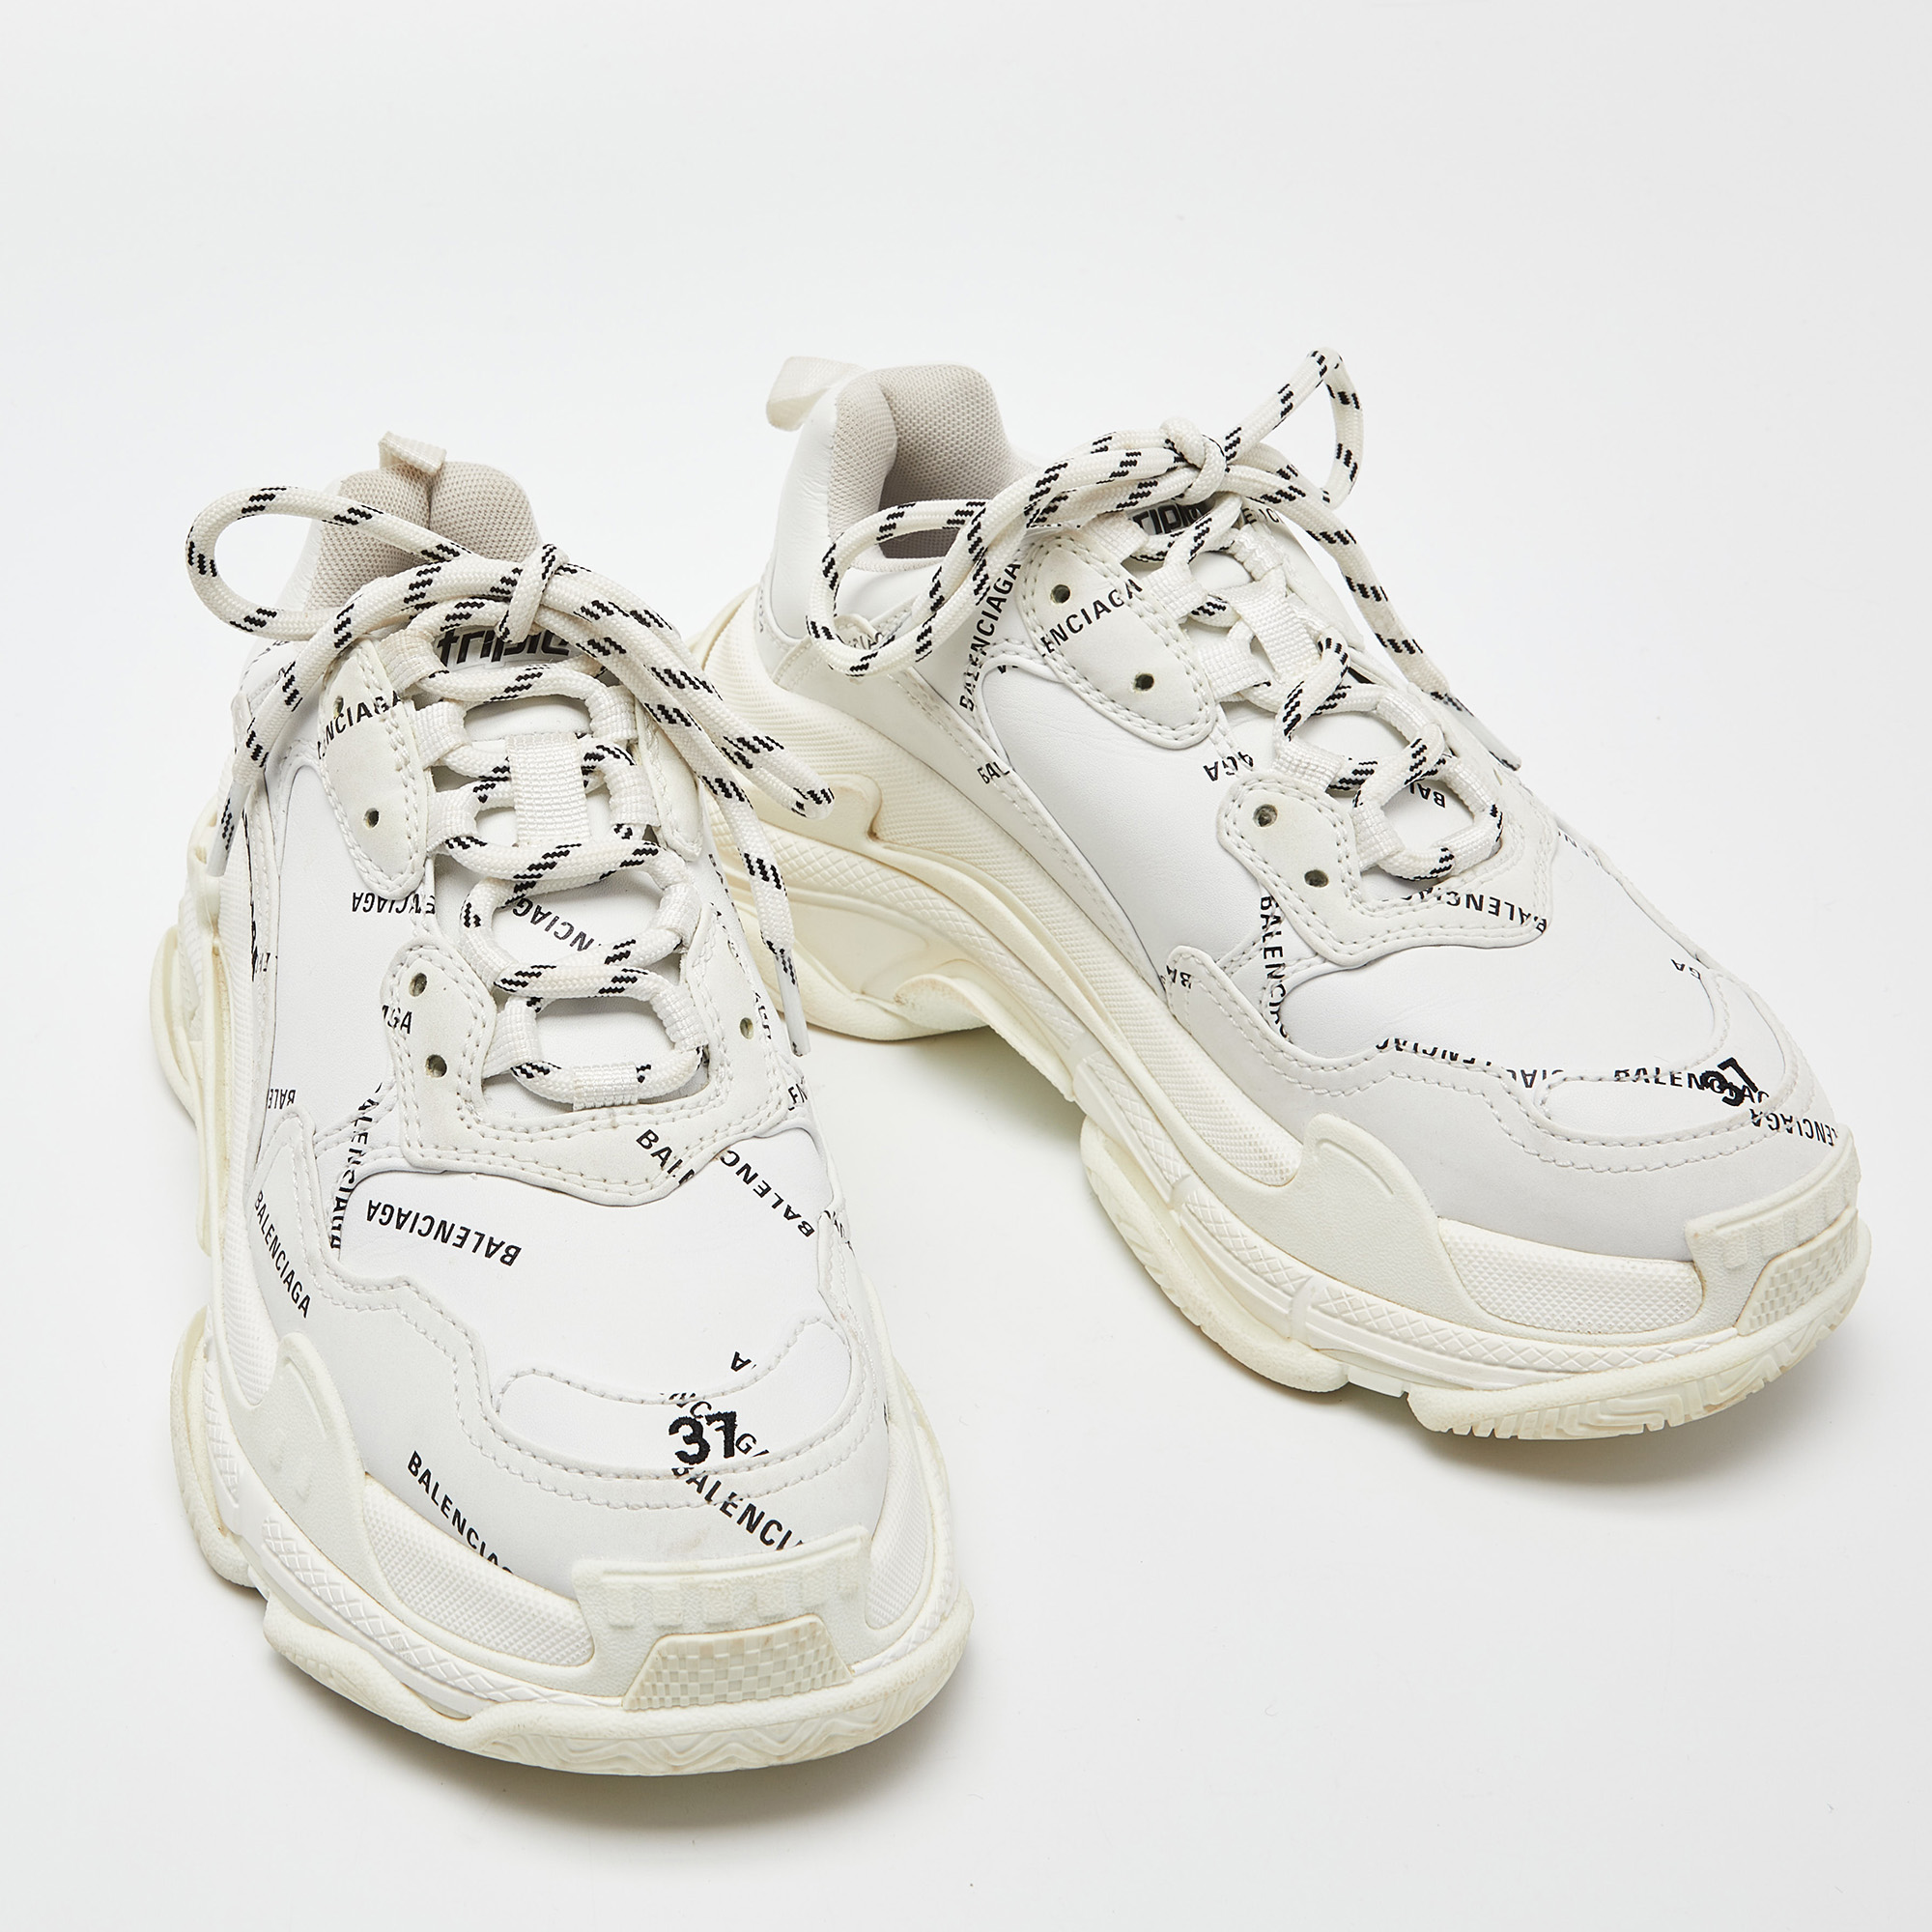 Balenciaga White Leather All-Over Logo Triple S Sneaker Size 37